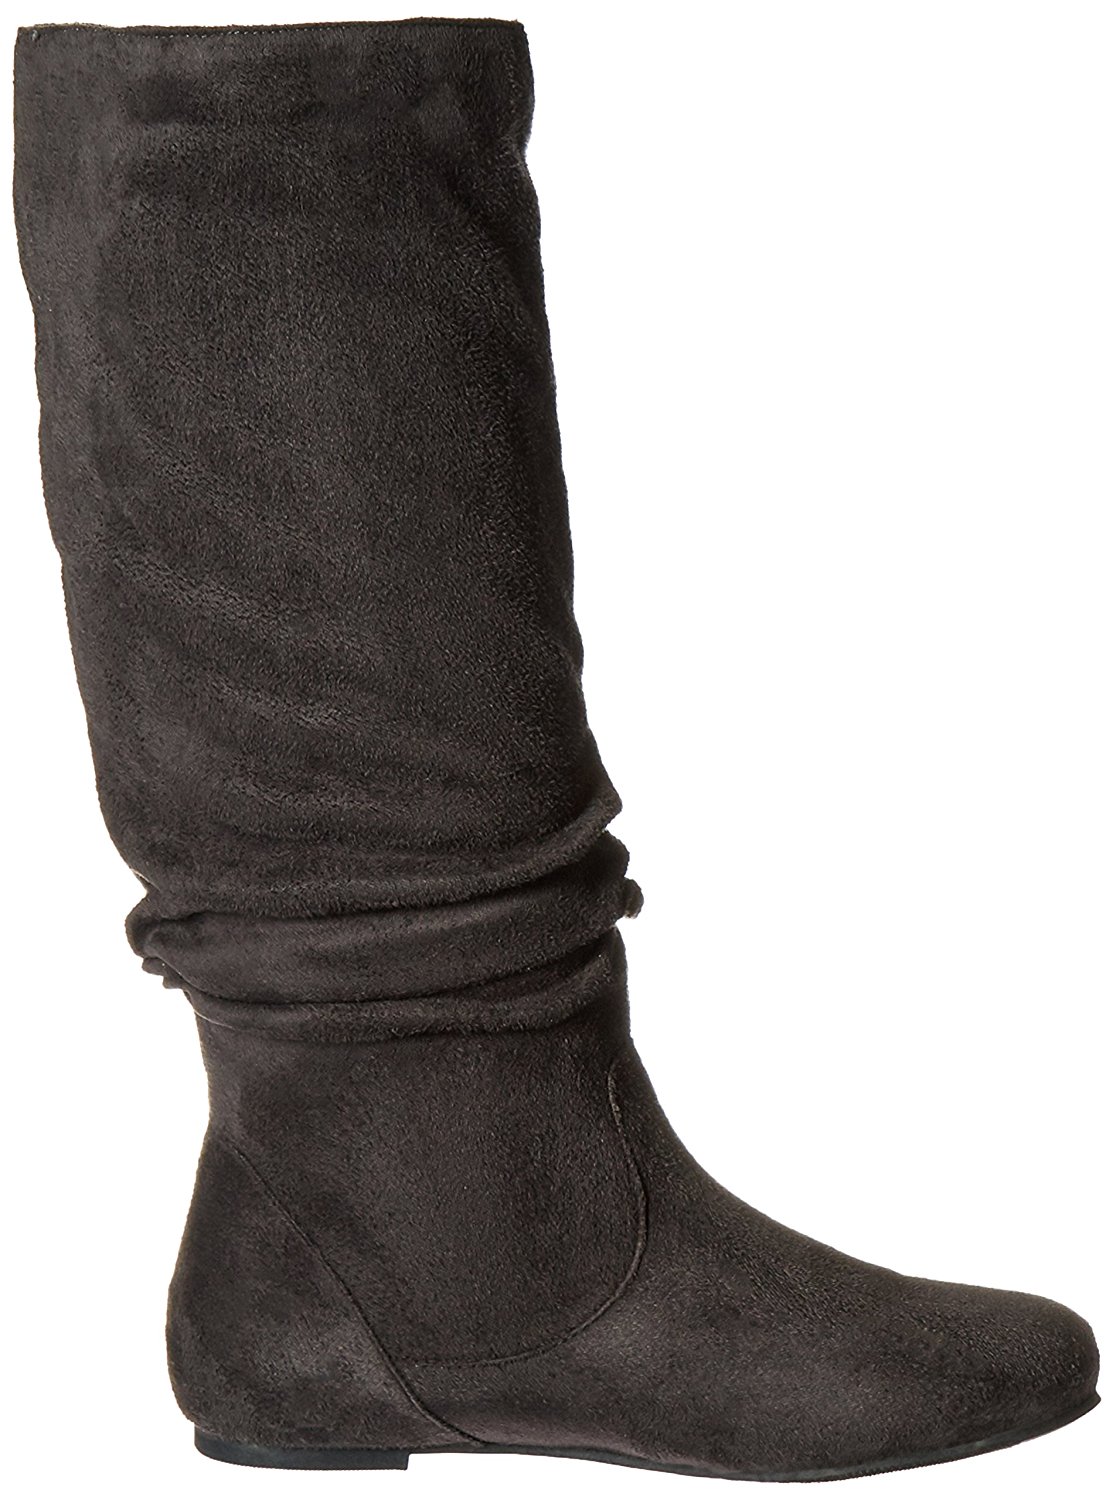 Brinley Co Women's Brinley-02 Slouch Boot, Grey, Size 10.0 | eBay